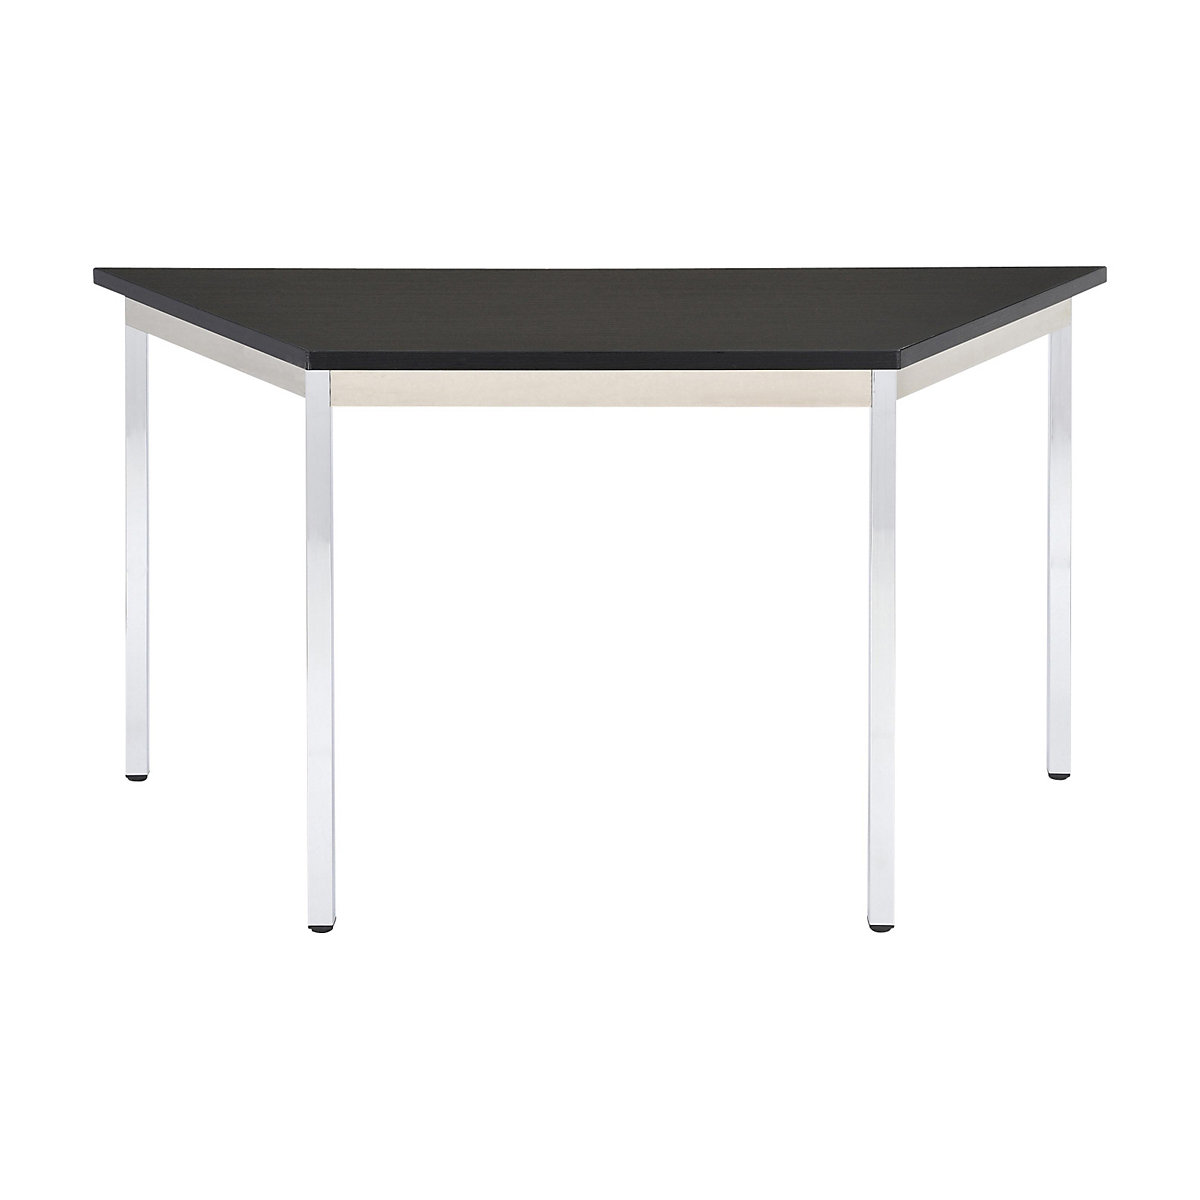 Table polyvalente – eurokraft basic, trapézoïdal, h x l x p 740 x 1400 x 700 mm, plateau noir, piétement chromé-17